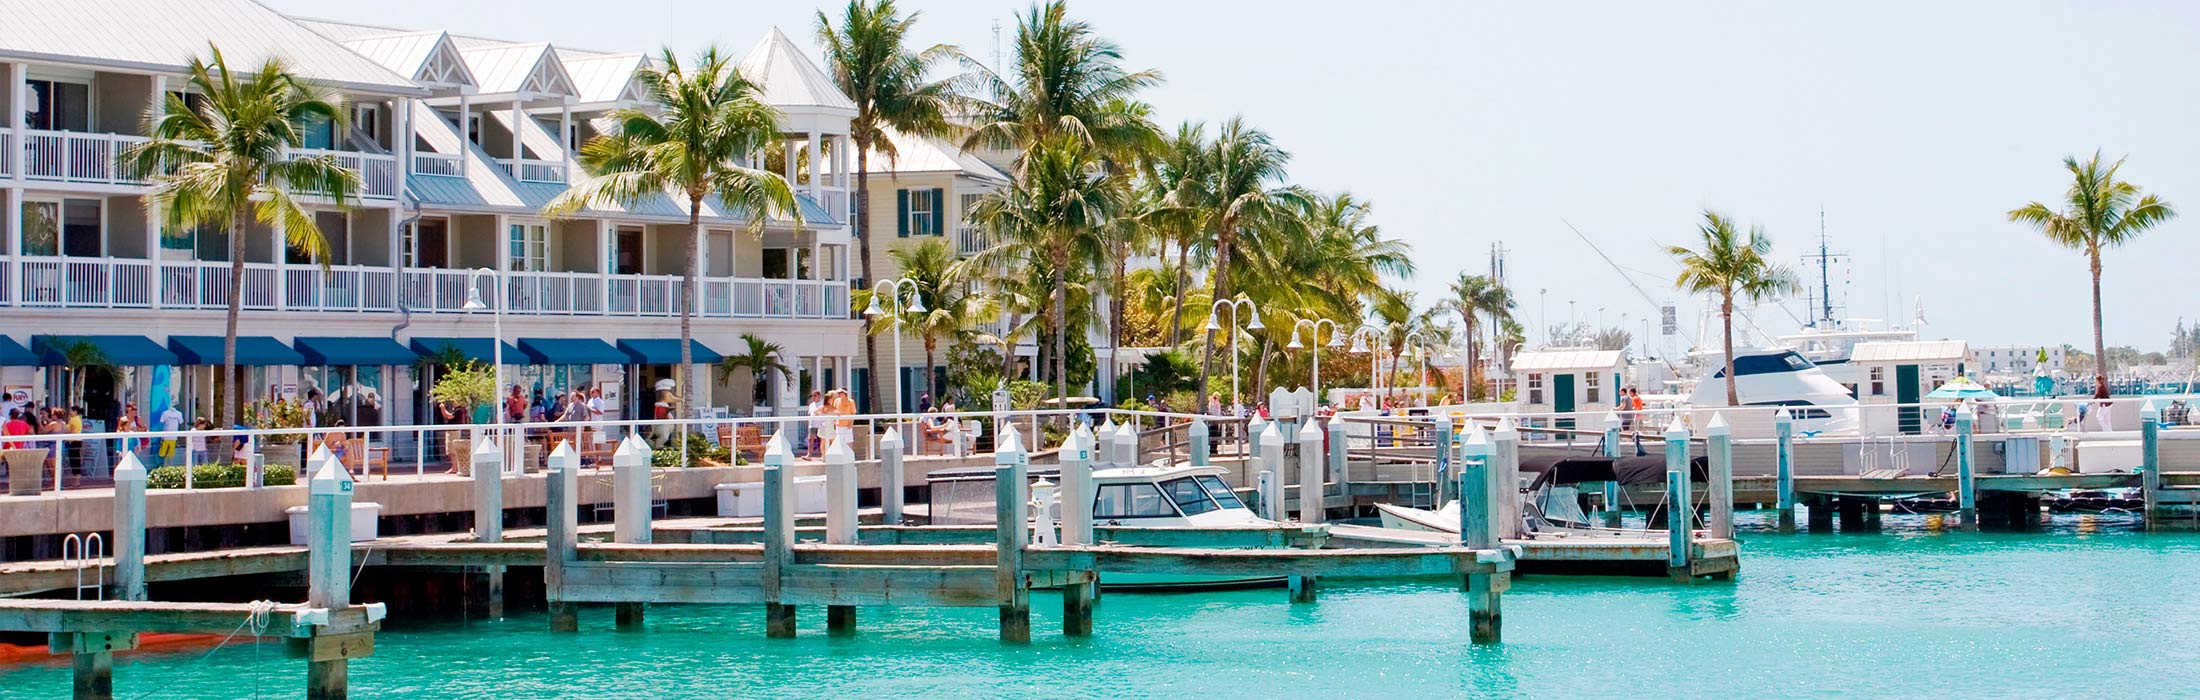 top-yacht-charter-destinations-north-america-florida-keys-slider-1.jpg